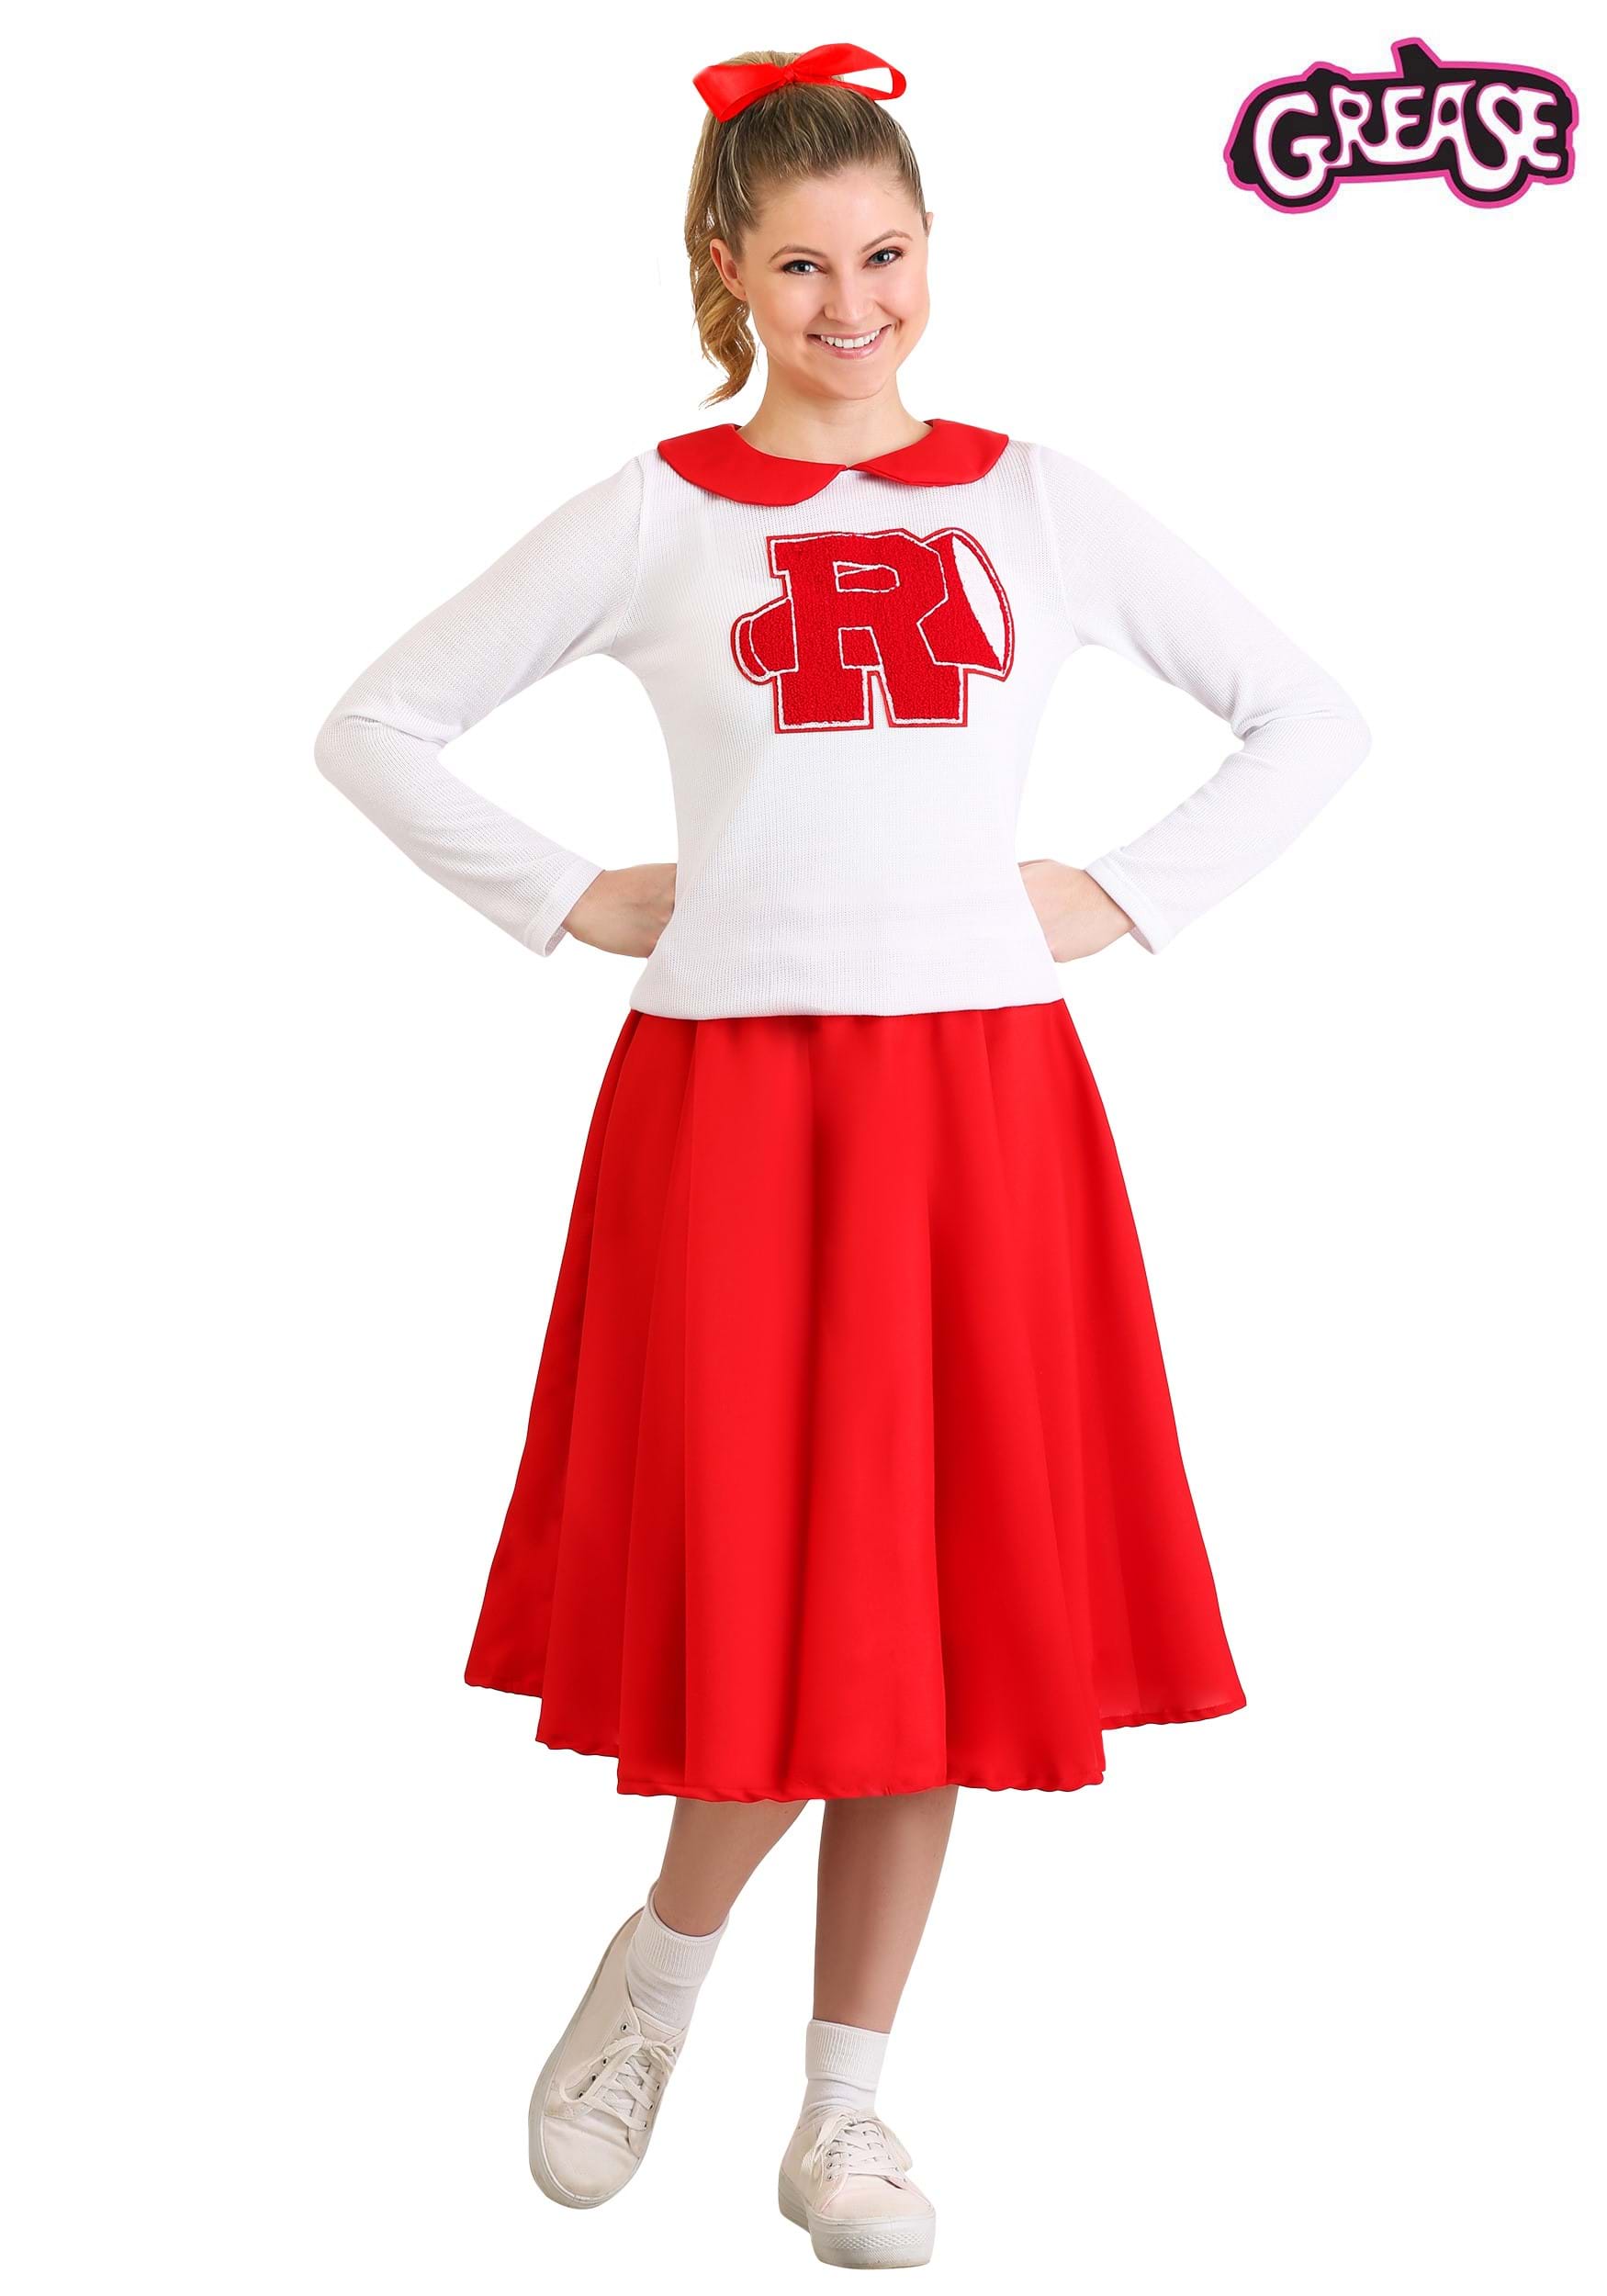 Women's Grease Rydell High Cheerleader Costume